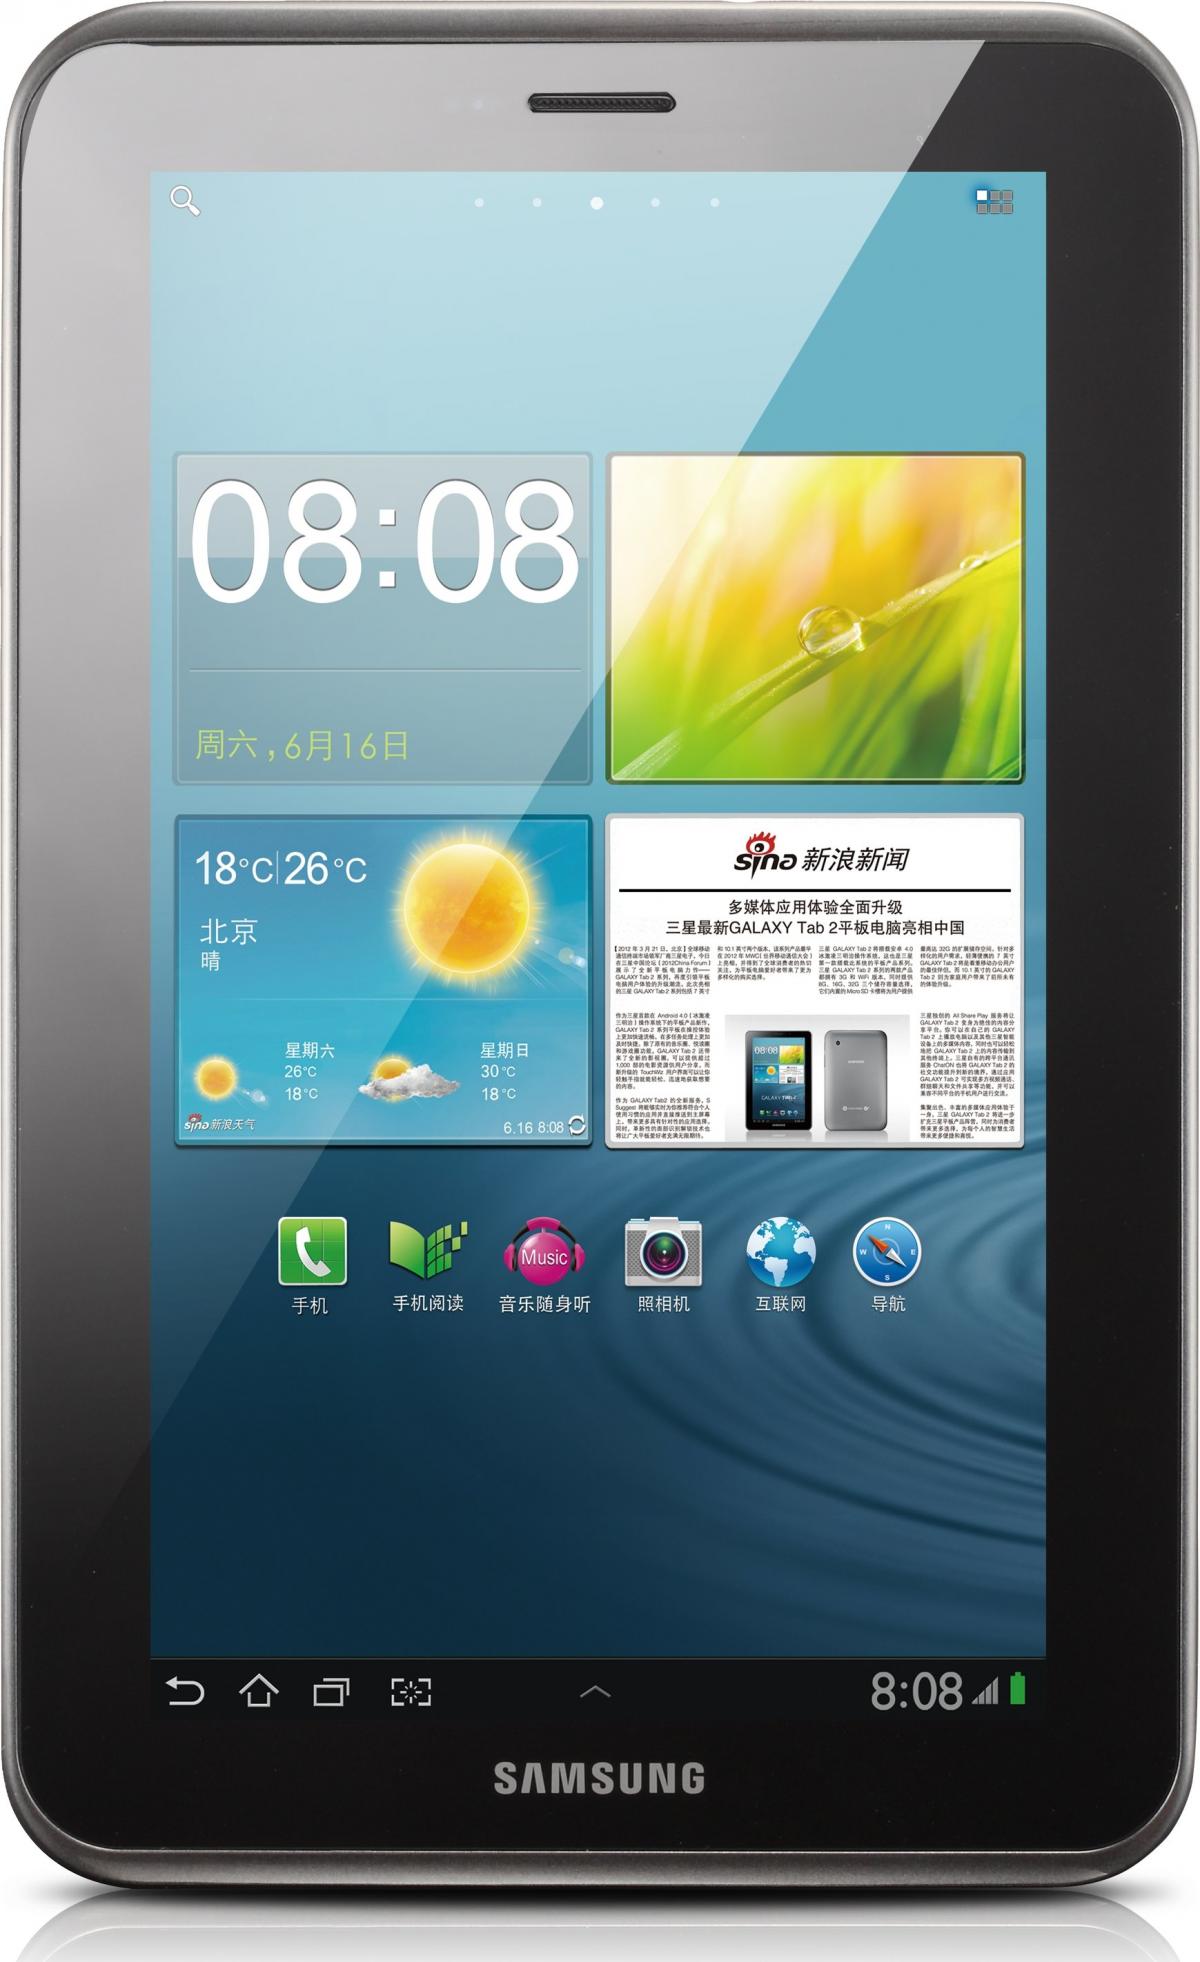 Galaxy Tab 2 7.0 (Chinese) GT-P3108